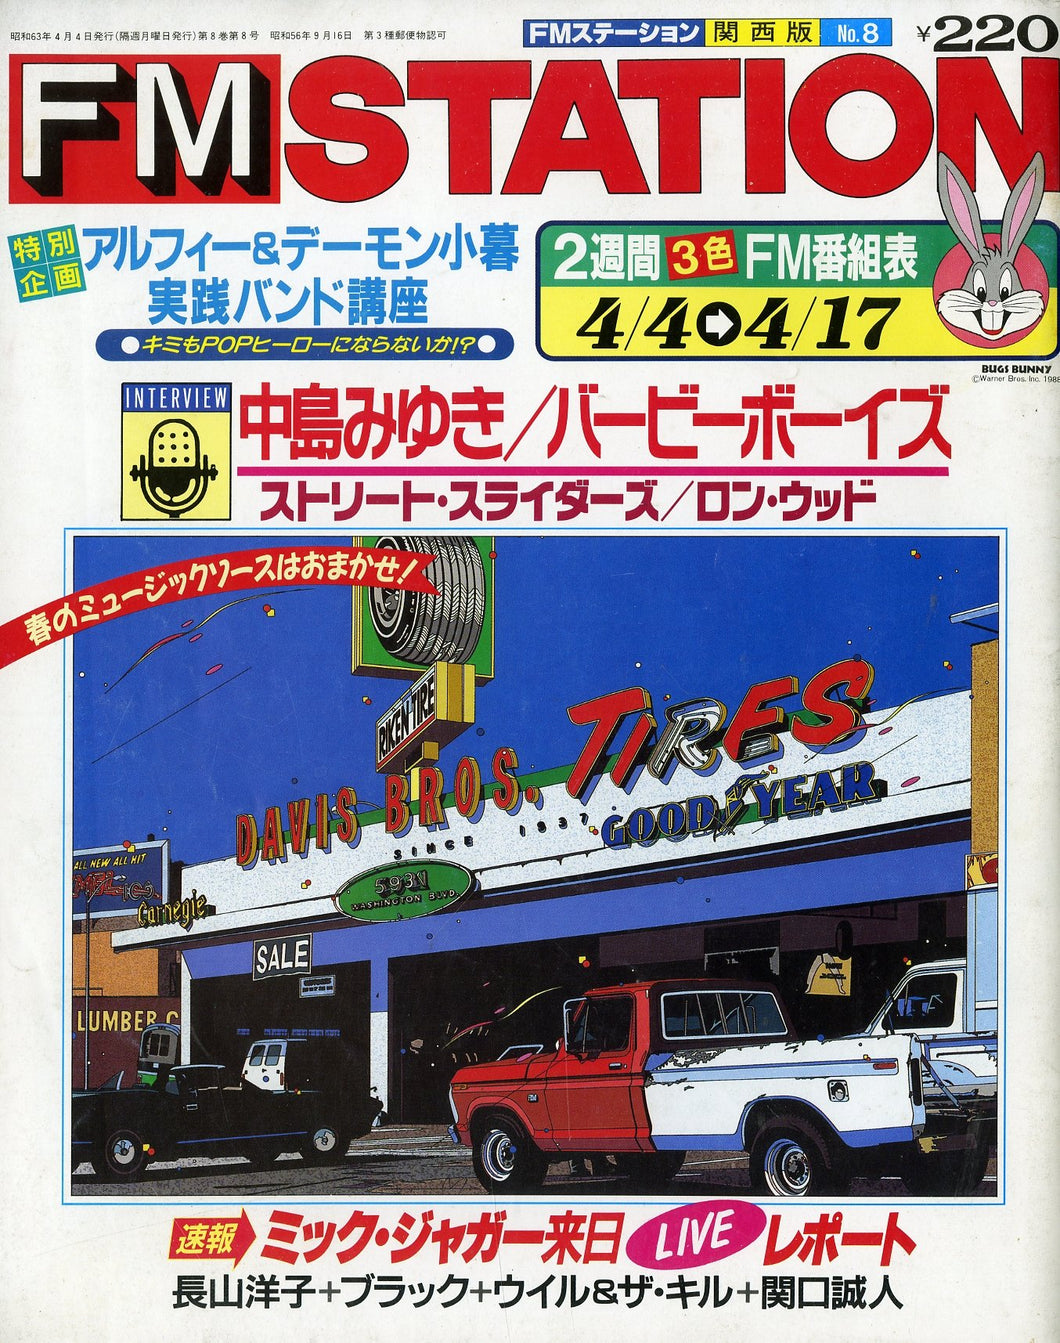 FMステーション 関西版 1988年4月4日号 No.8